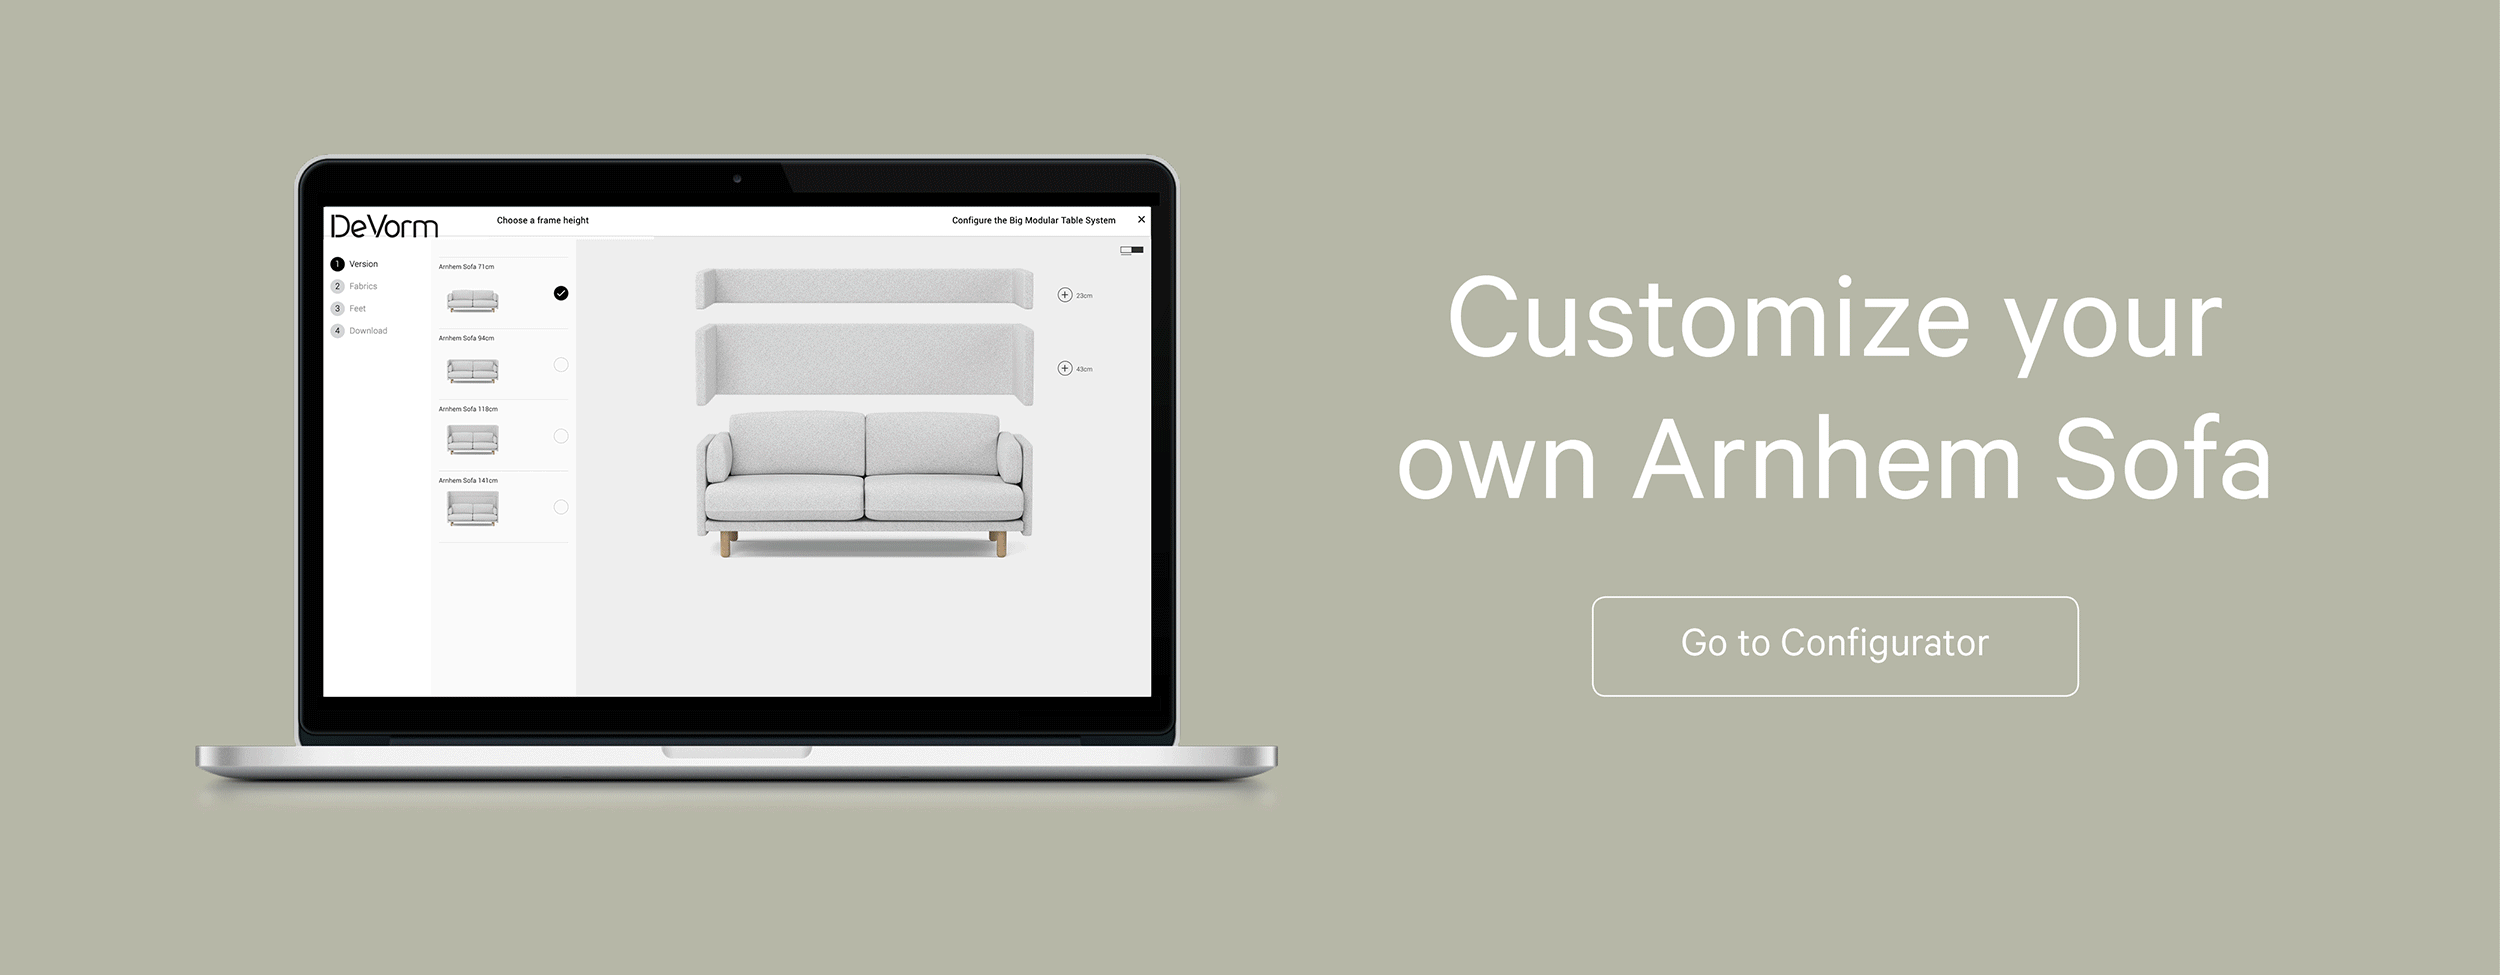 customize-your-own-arnhem-sofa